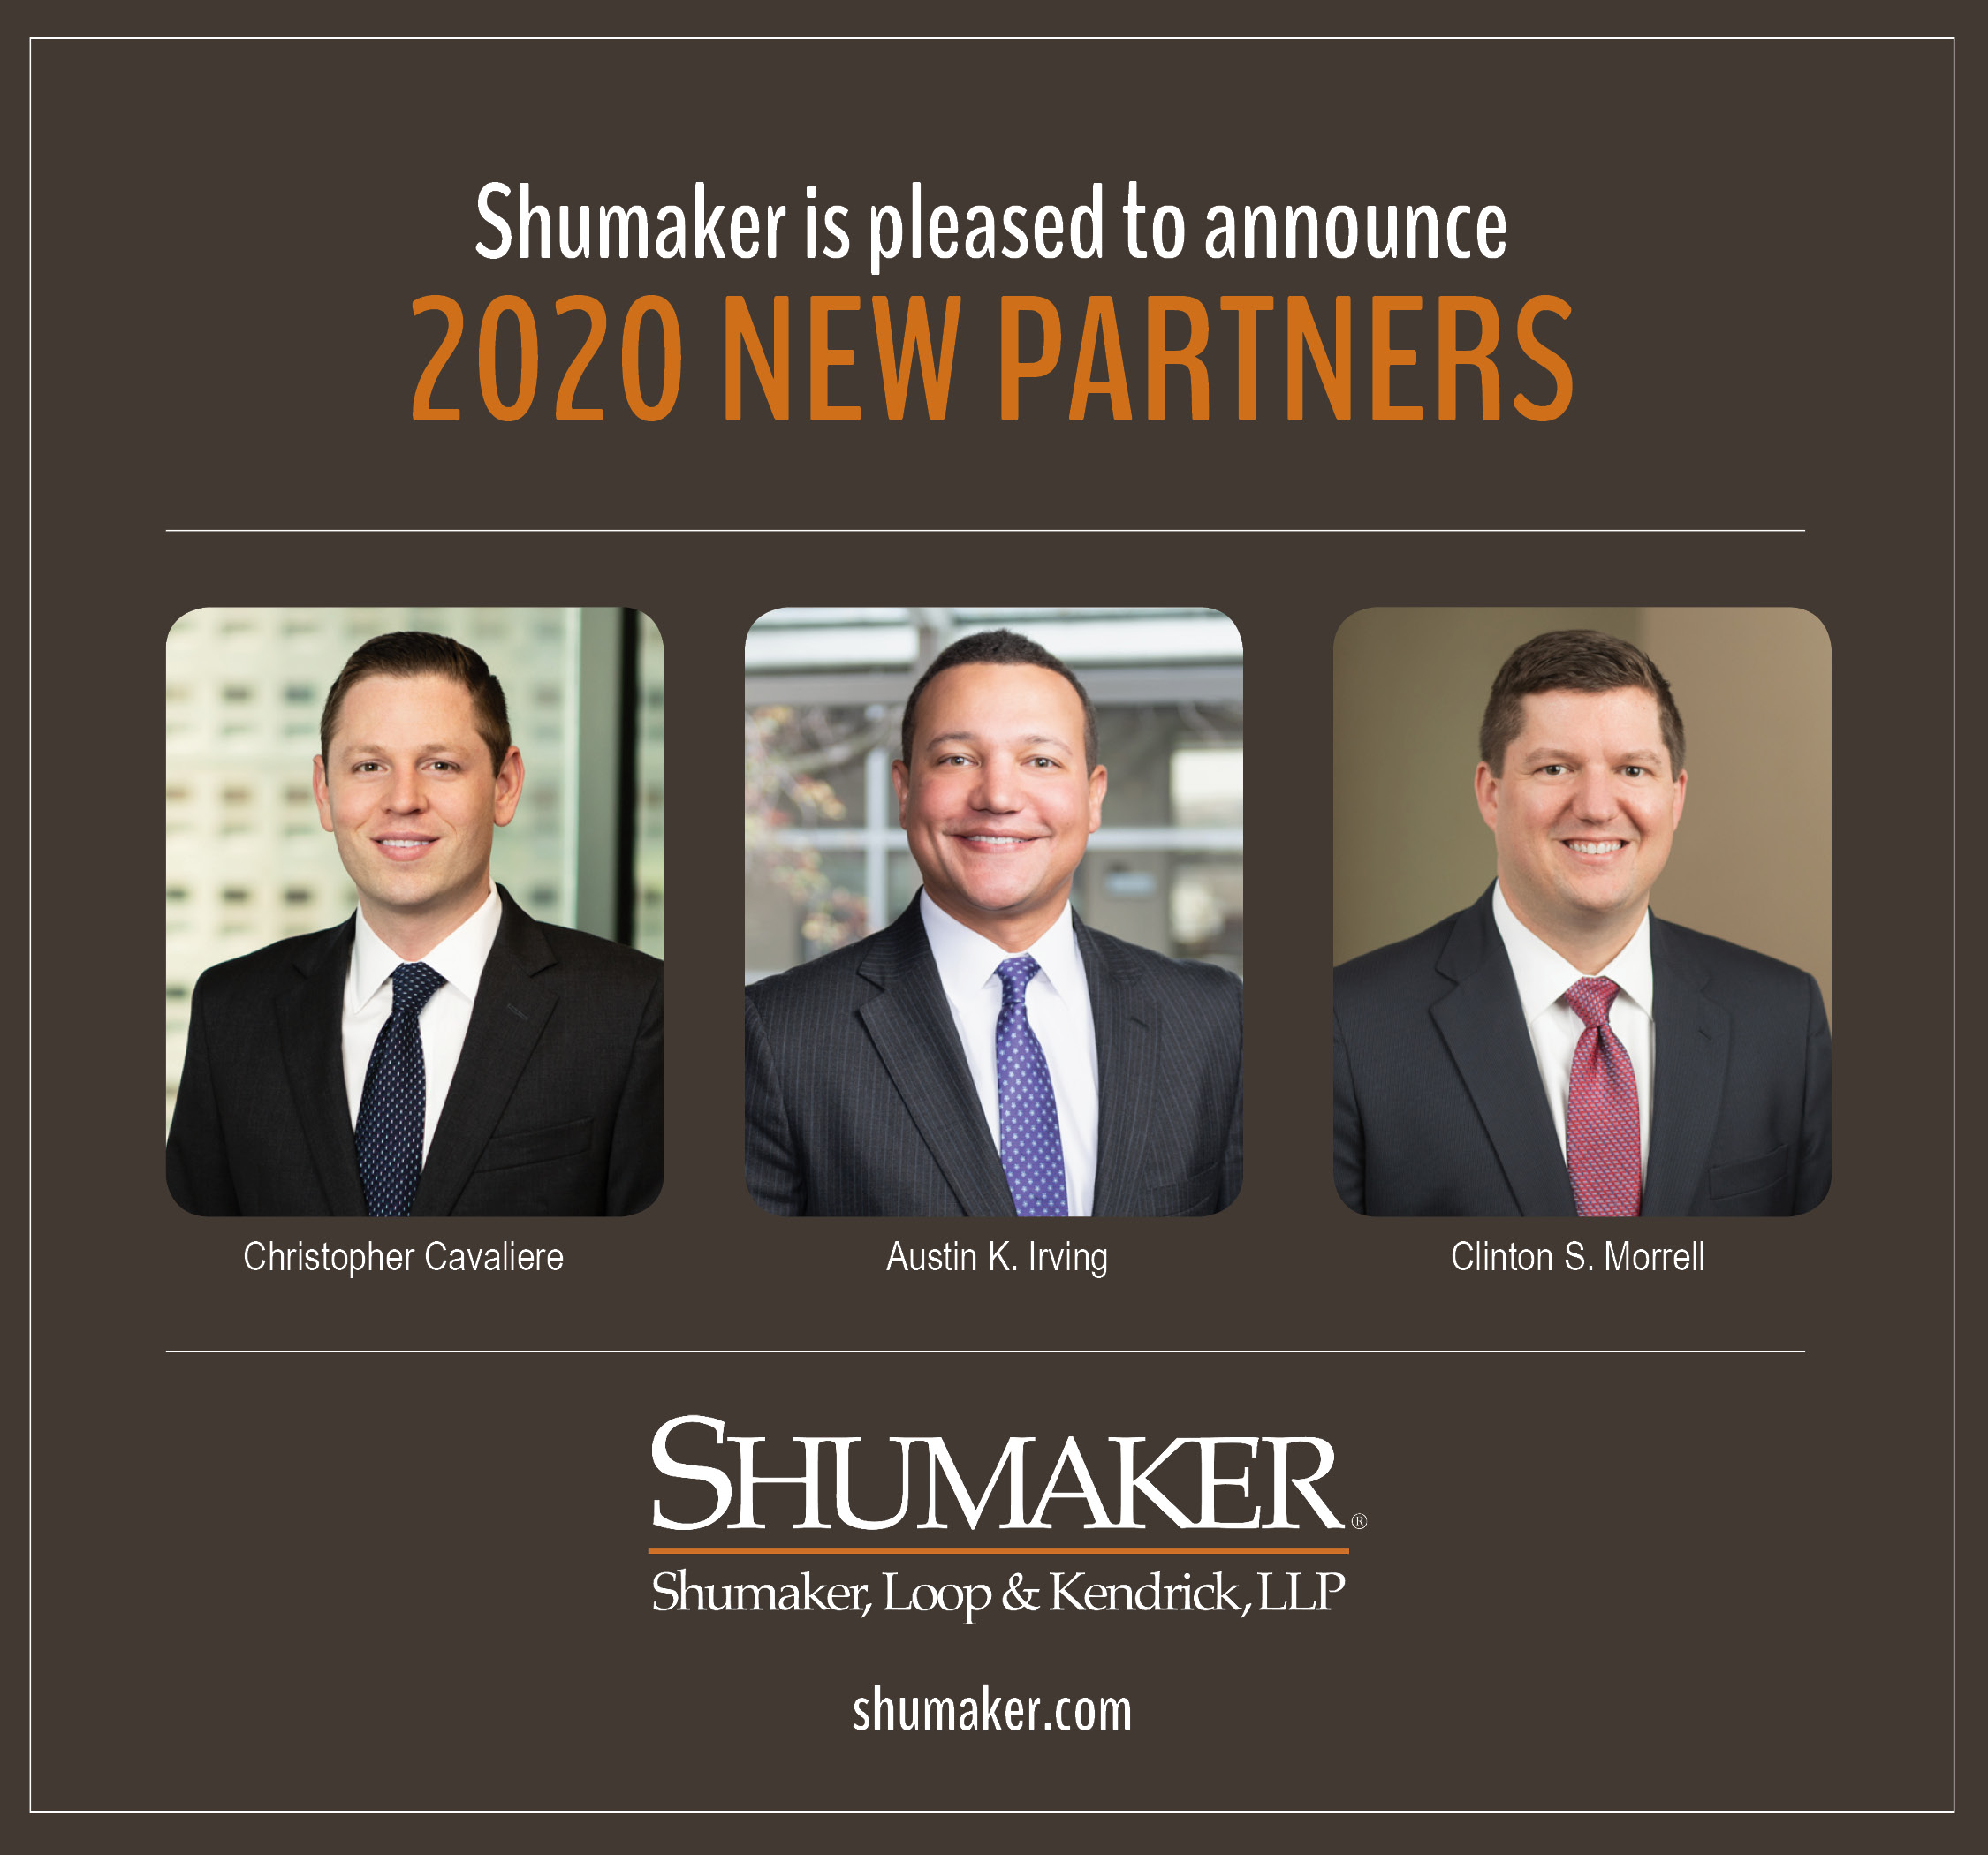 Shumaker, Loop & Kendrick, LLP Announces New Partners